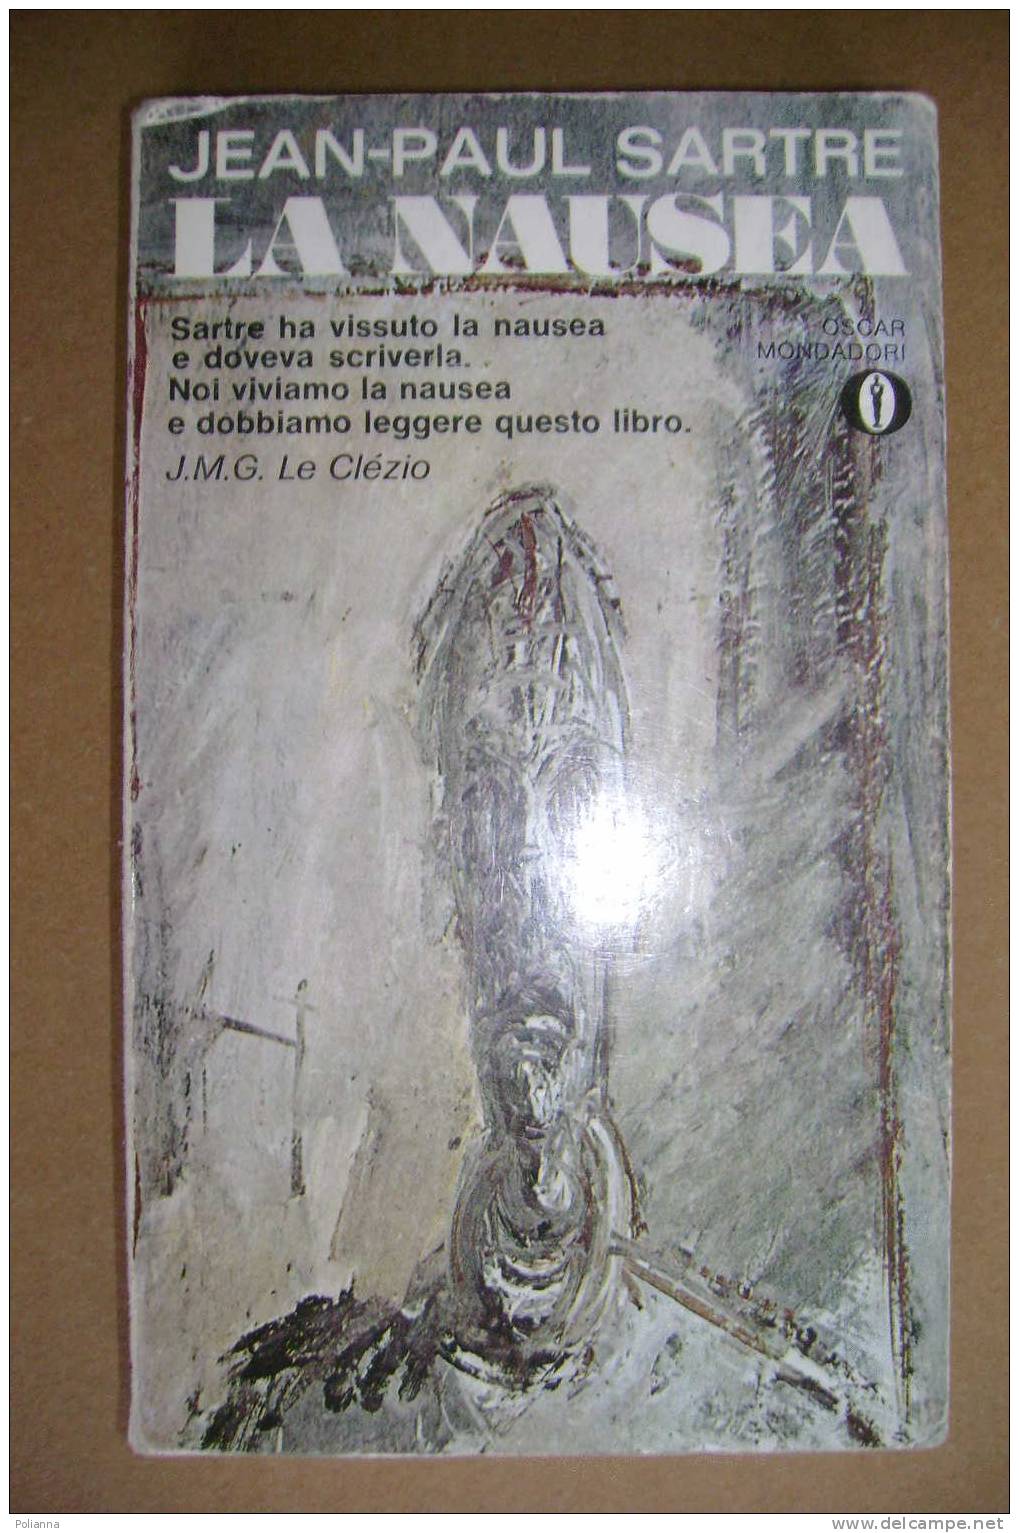 PAI/7 Jean Paul Sartre LA NAUSEA Oscar Mondadori 1970 - Nouvelles, Contes